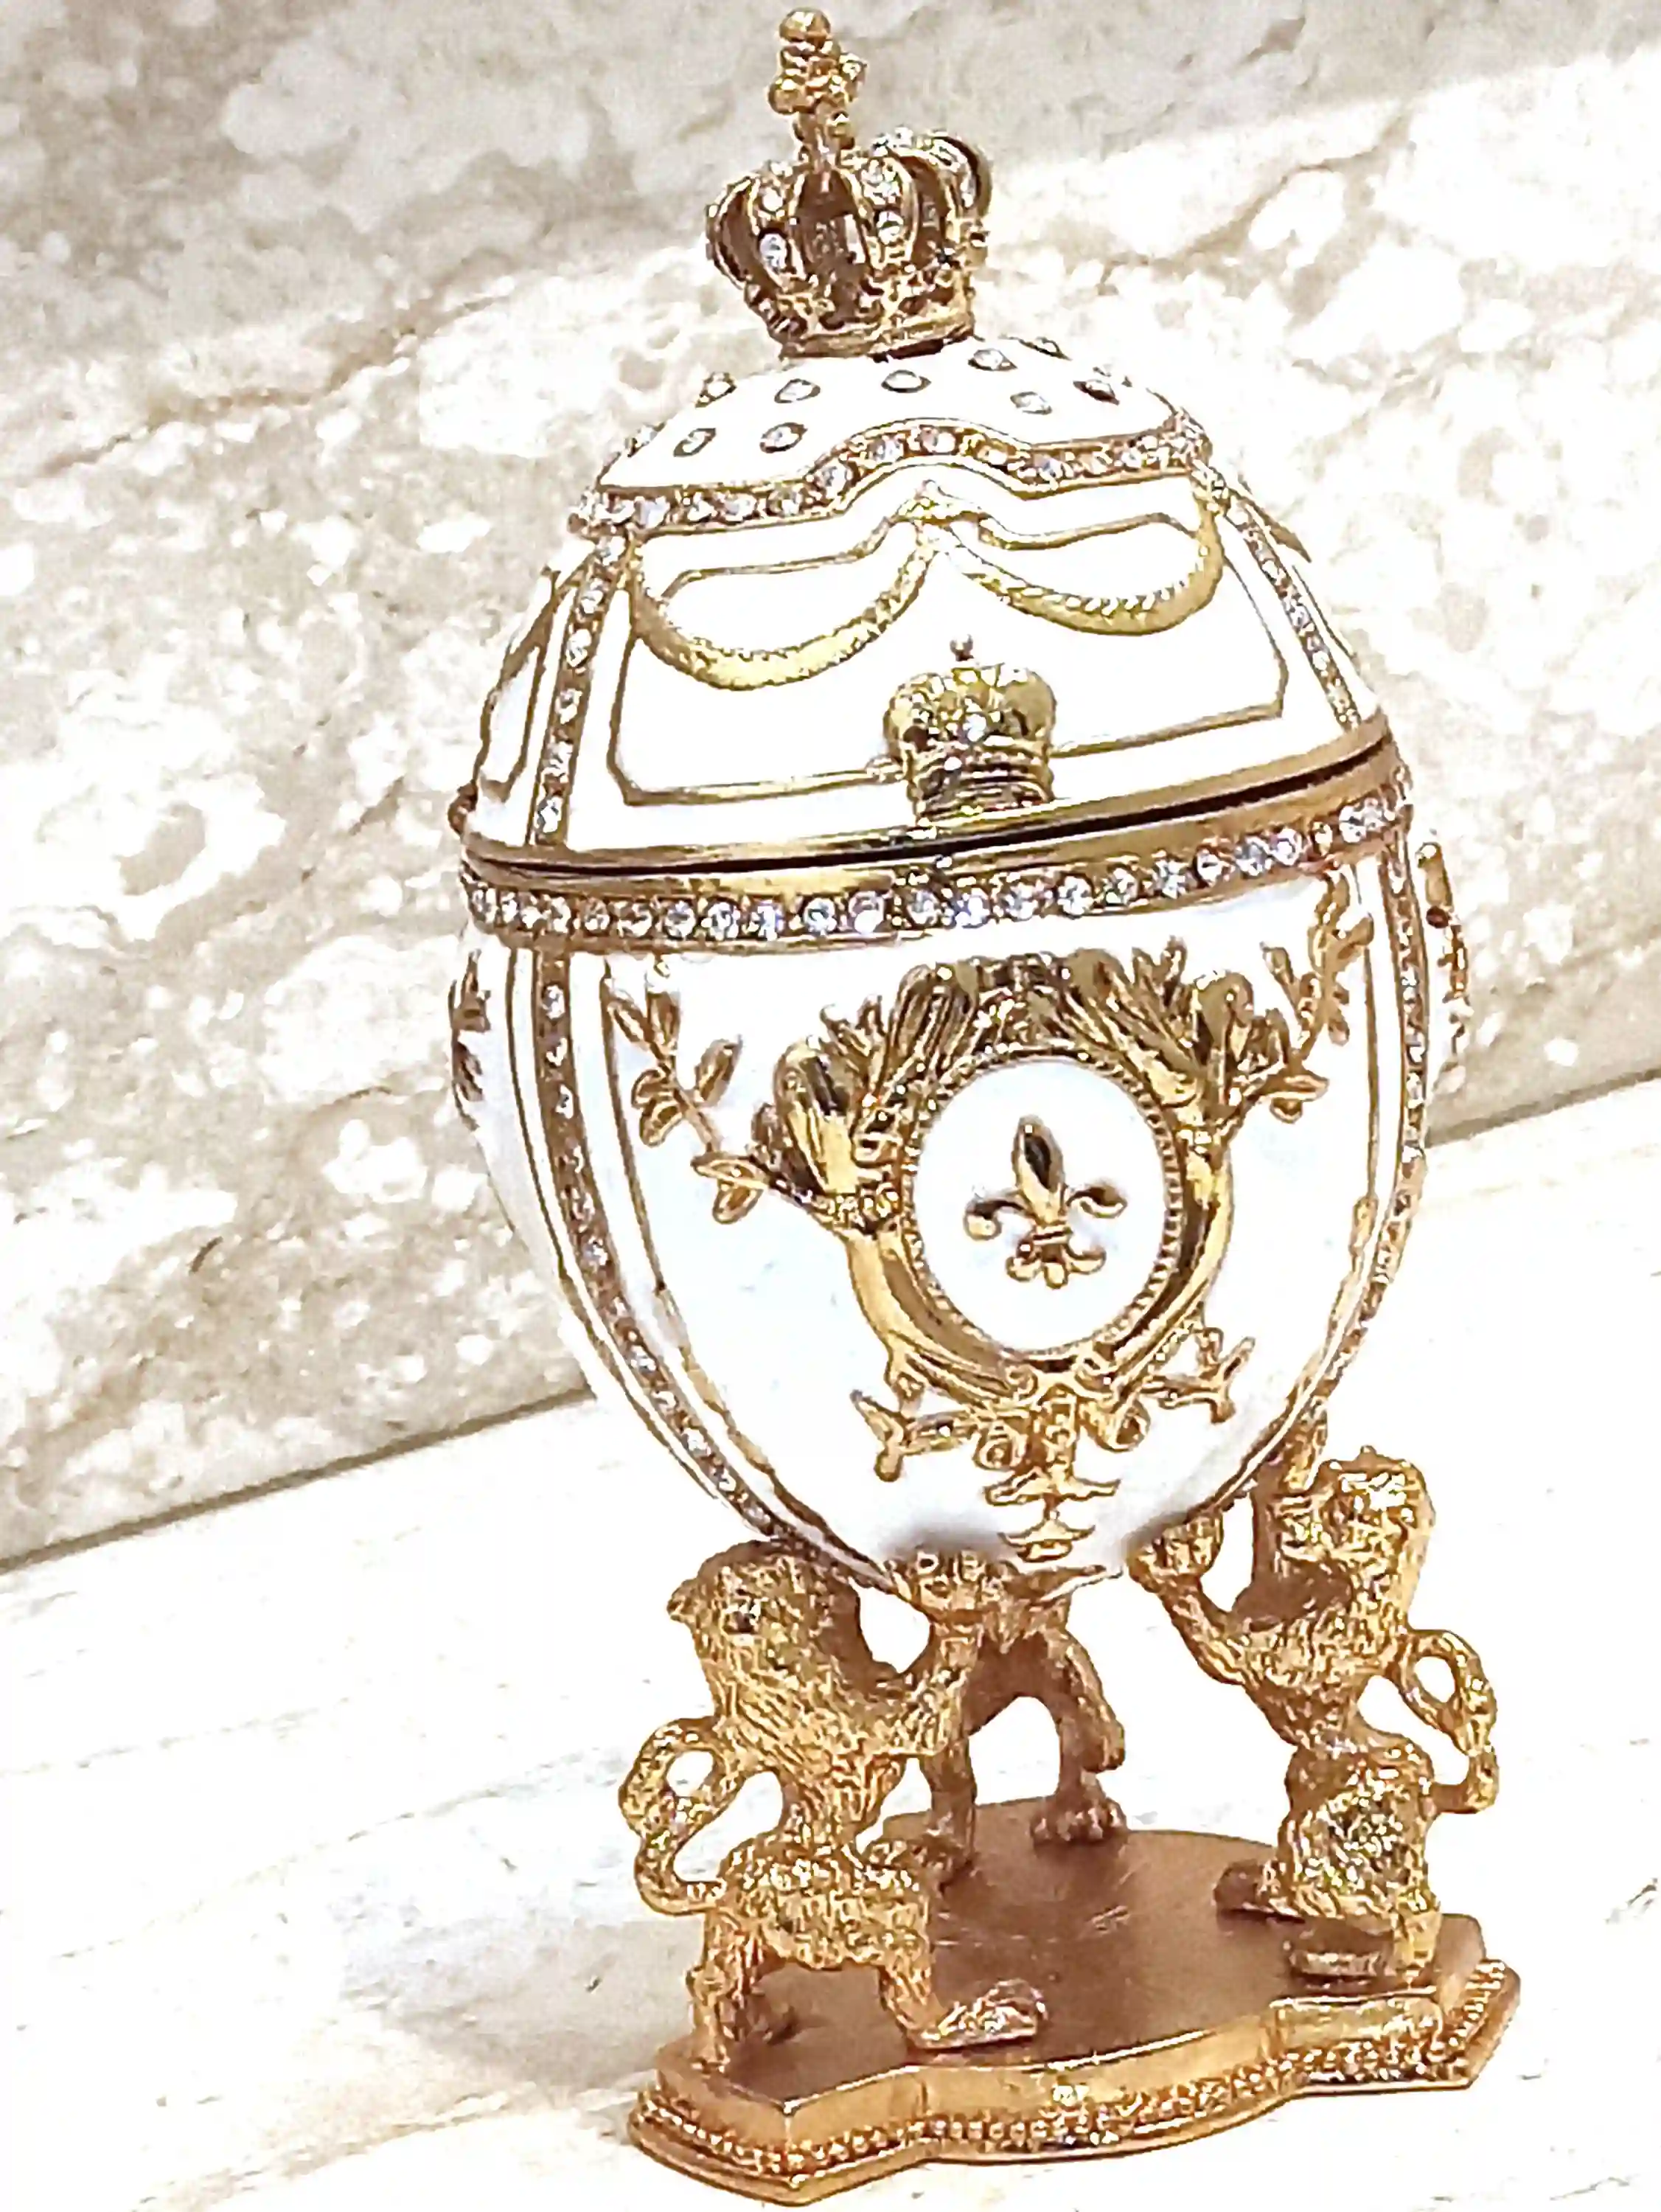 Coronation Lion Faberge Egg trinket box 24kt GOLD/Faberge Collectibles/Faberge egg Ornament/ Faberge Egg Jewelry Boxes/Faberge egg Style 